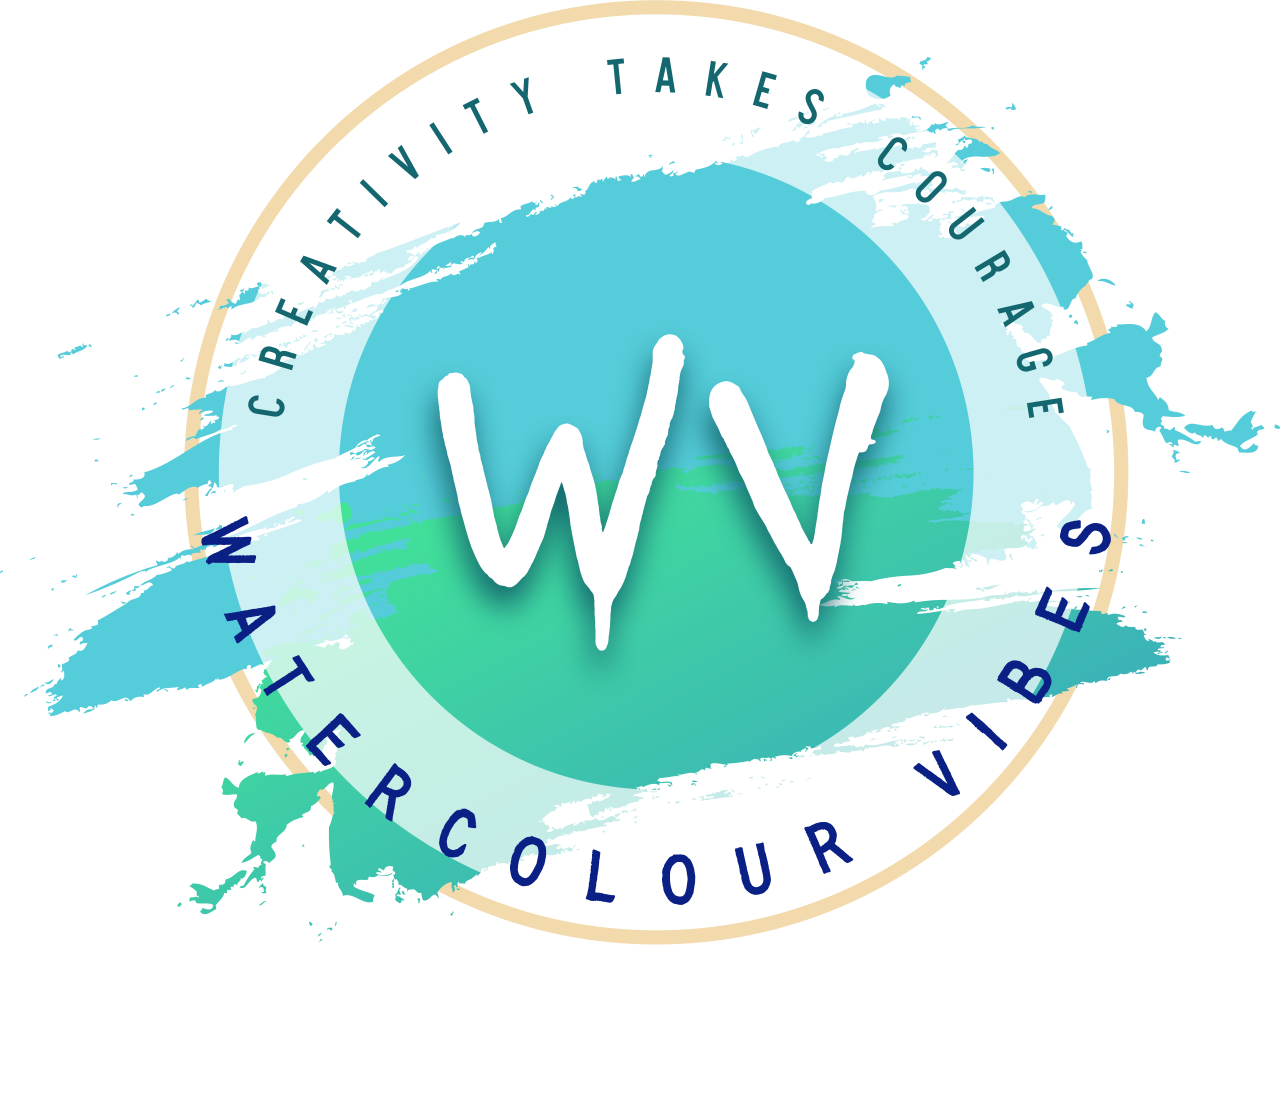 Watercolour Vibes's logo